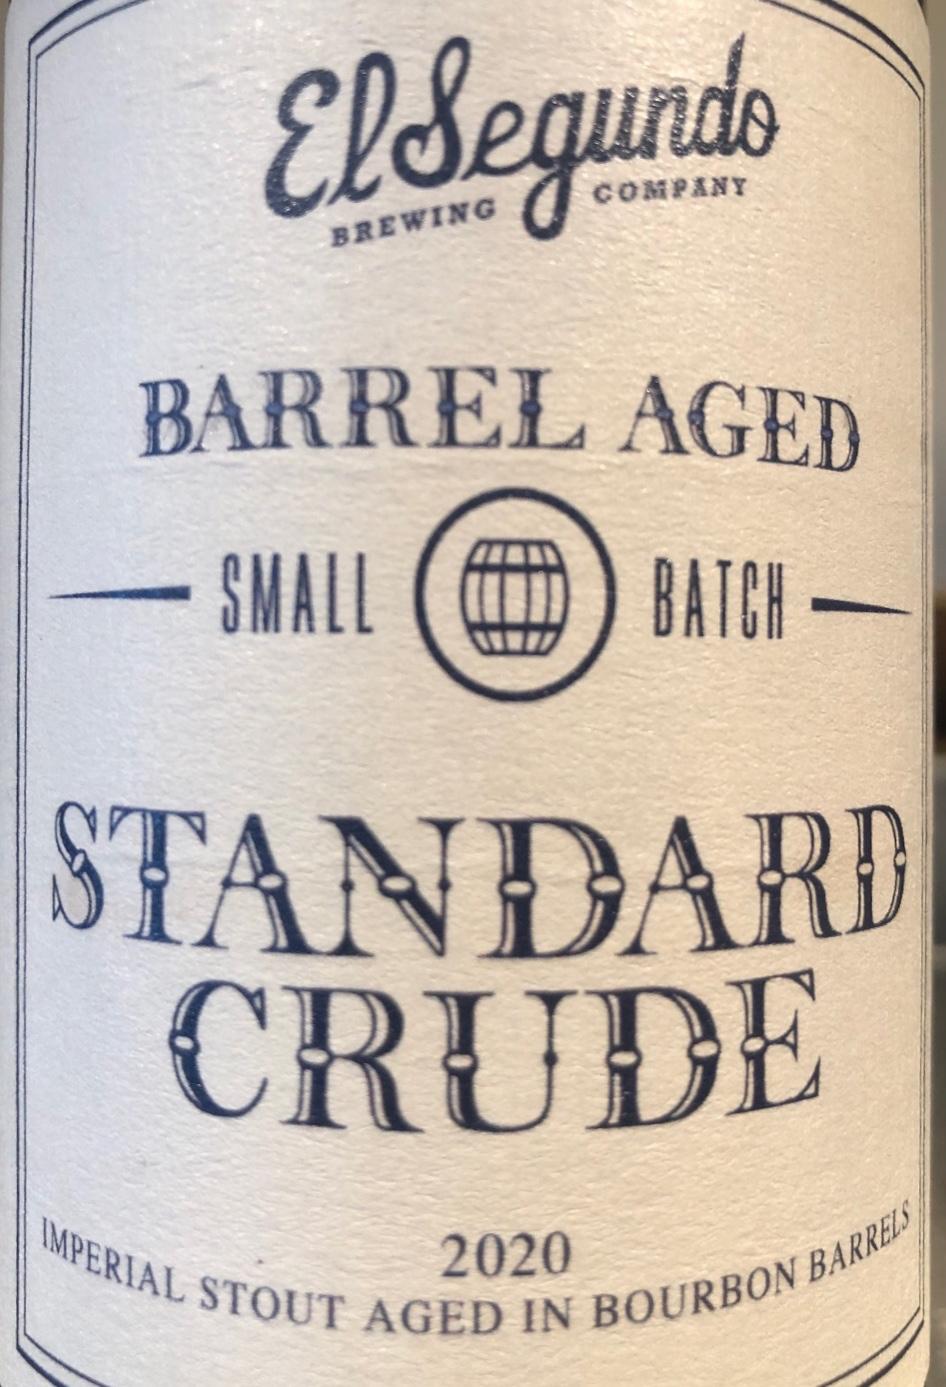 Standard Crude (Bourbon Barrel Aged)